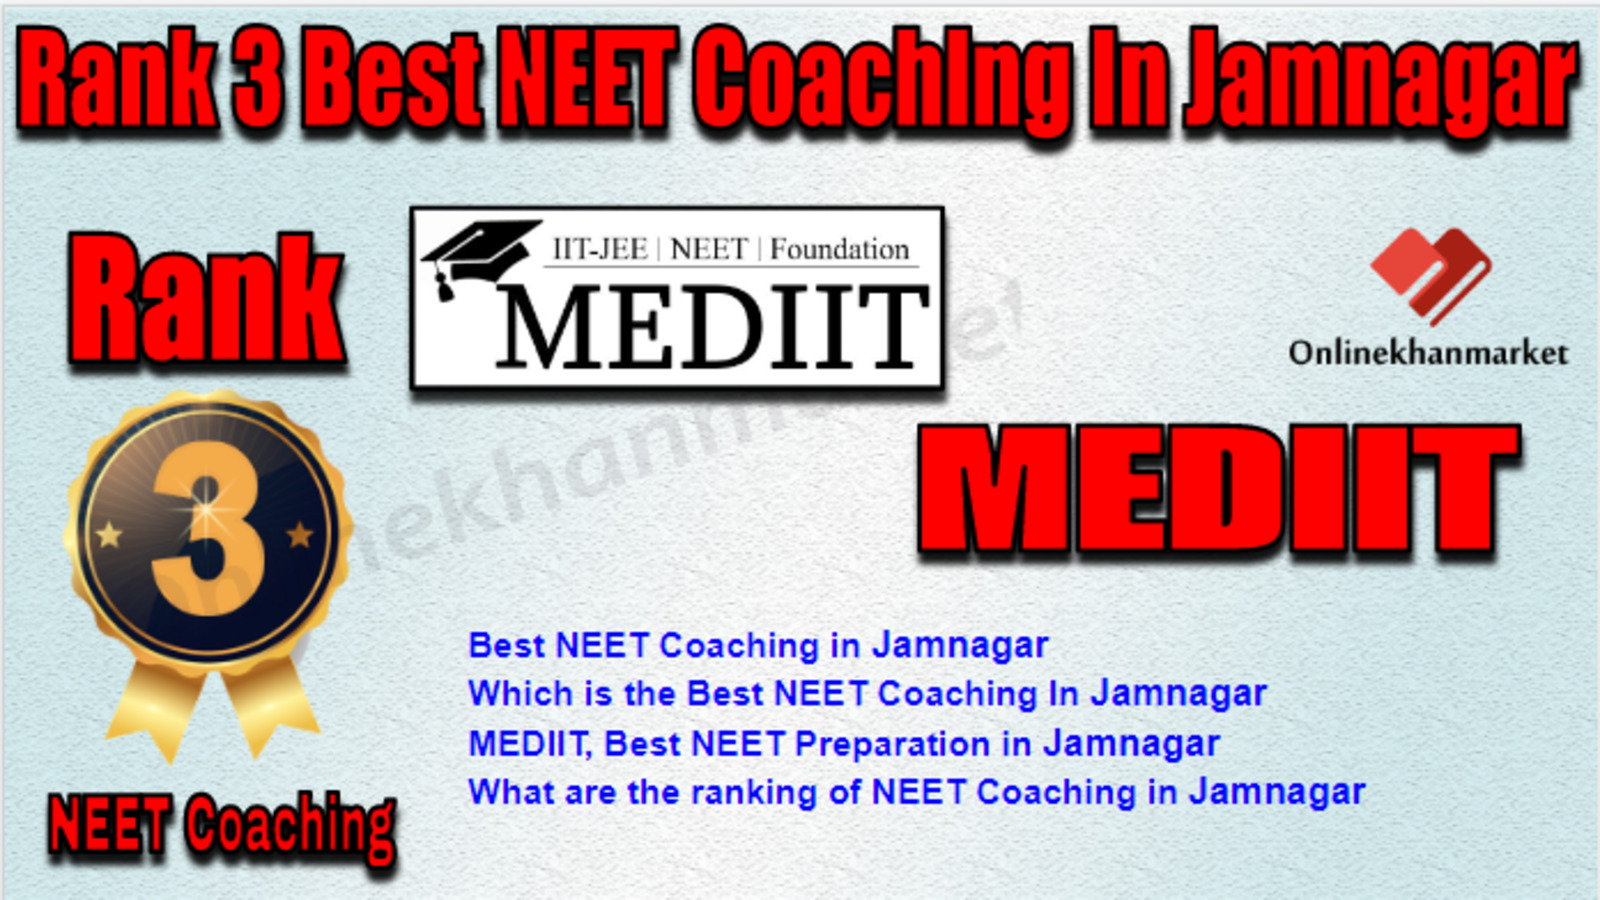 Rank 3 Best NEET Coaching in Jamnagar